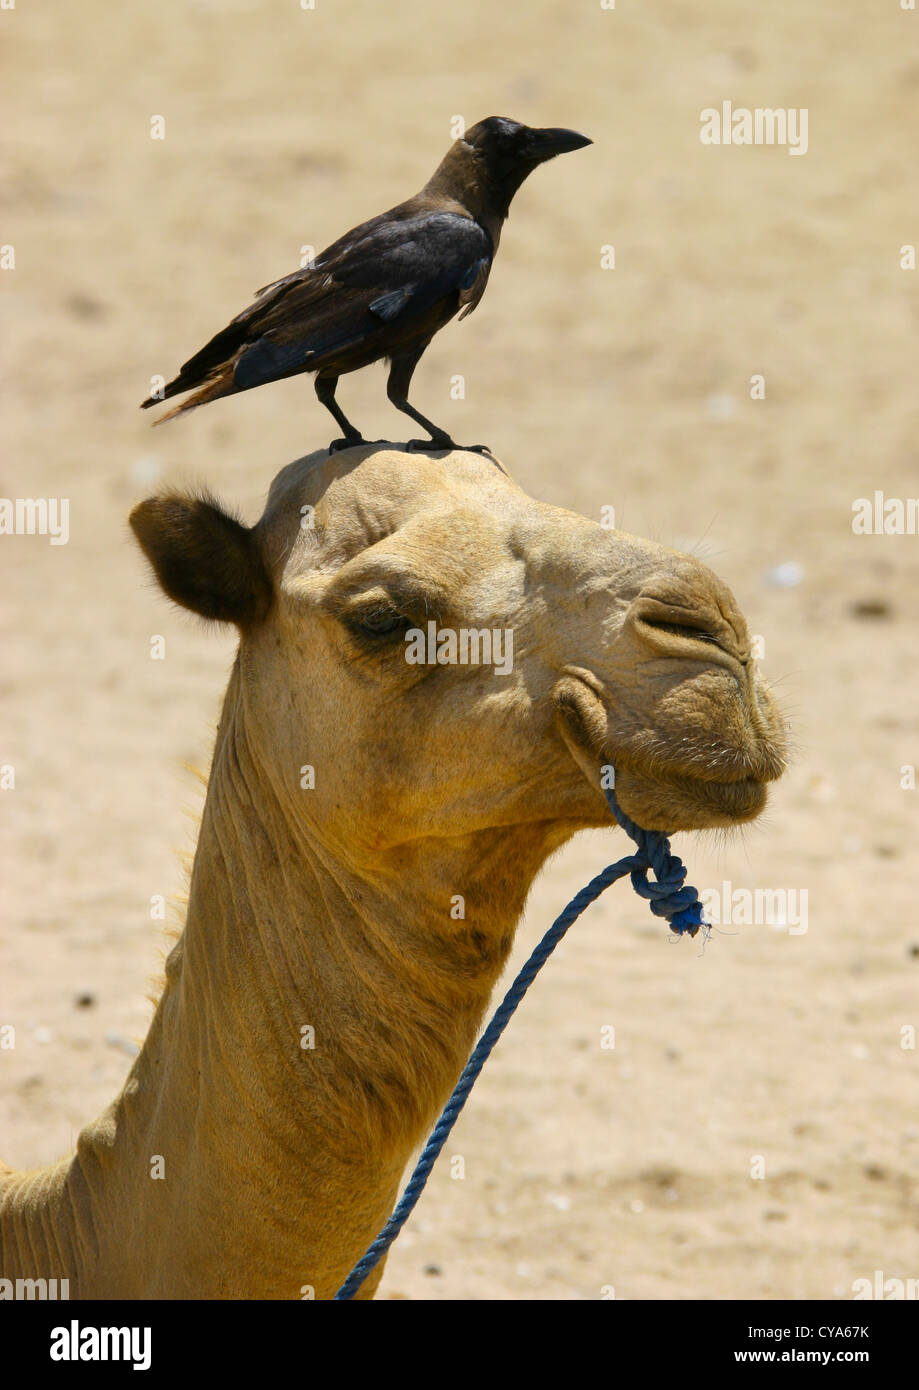 Camel With Crow On The Head, Keren, Eritrea Stock Photo